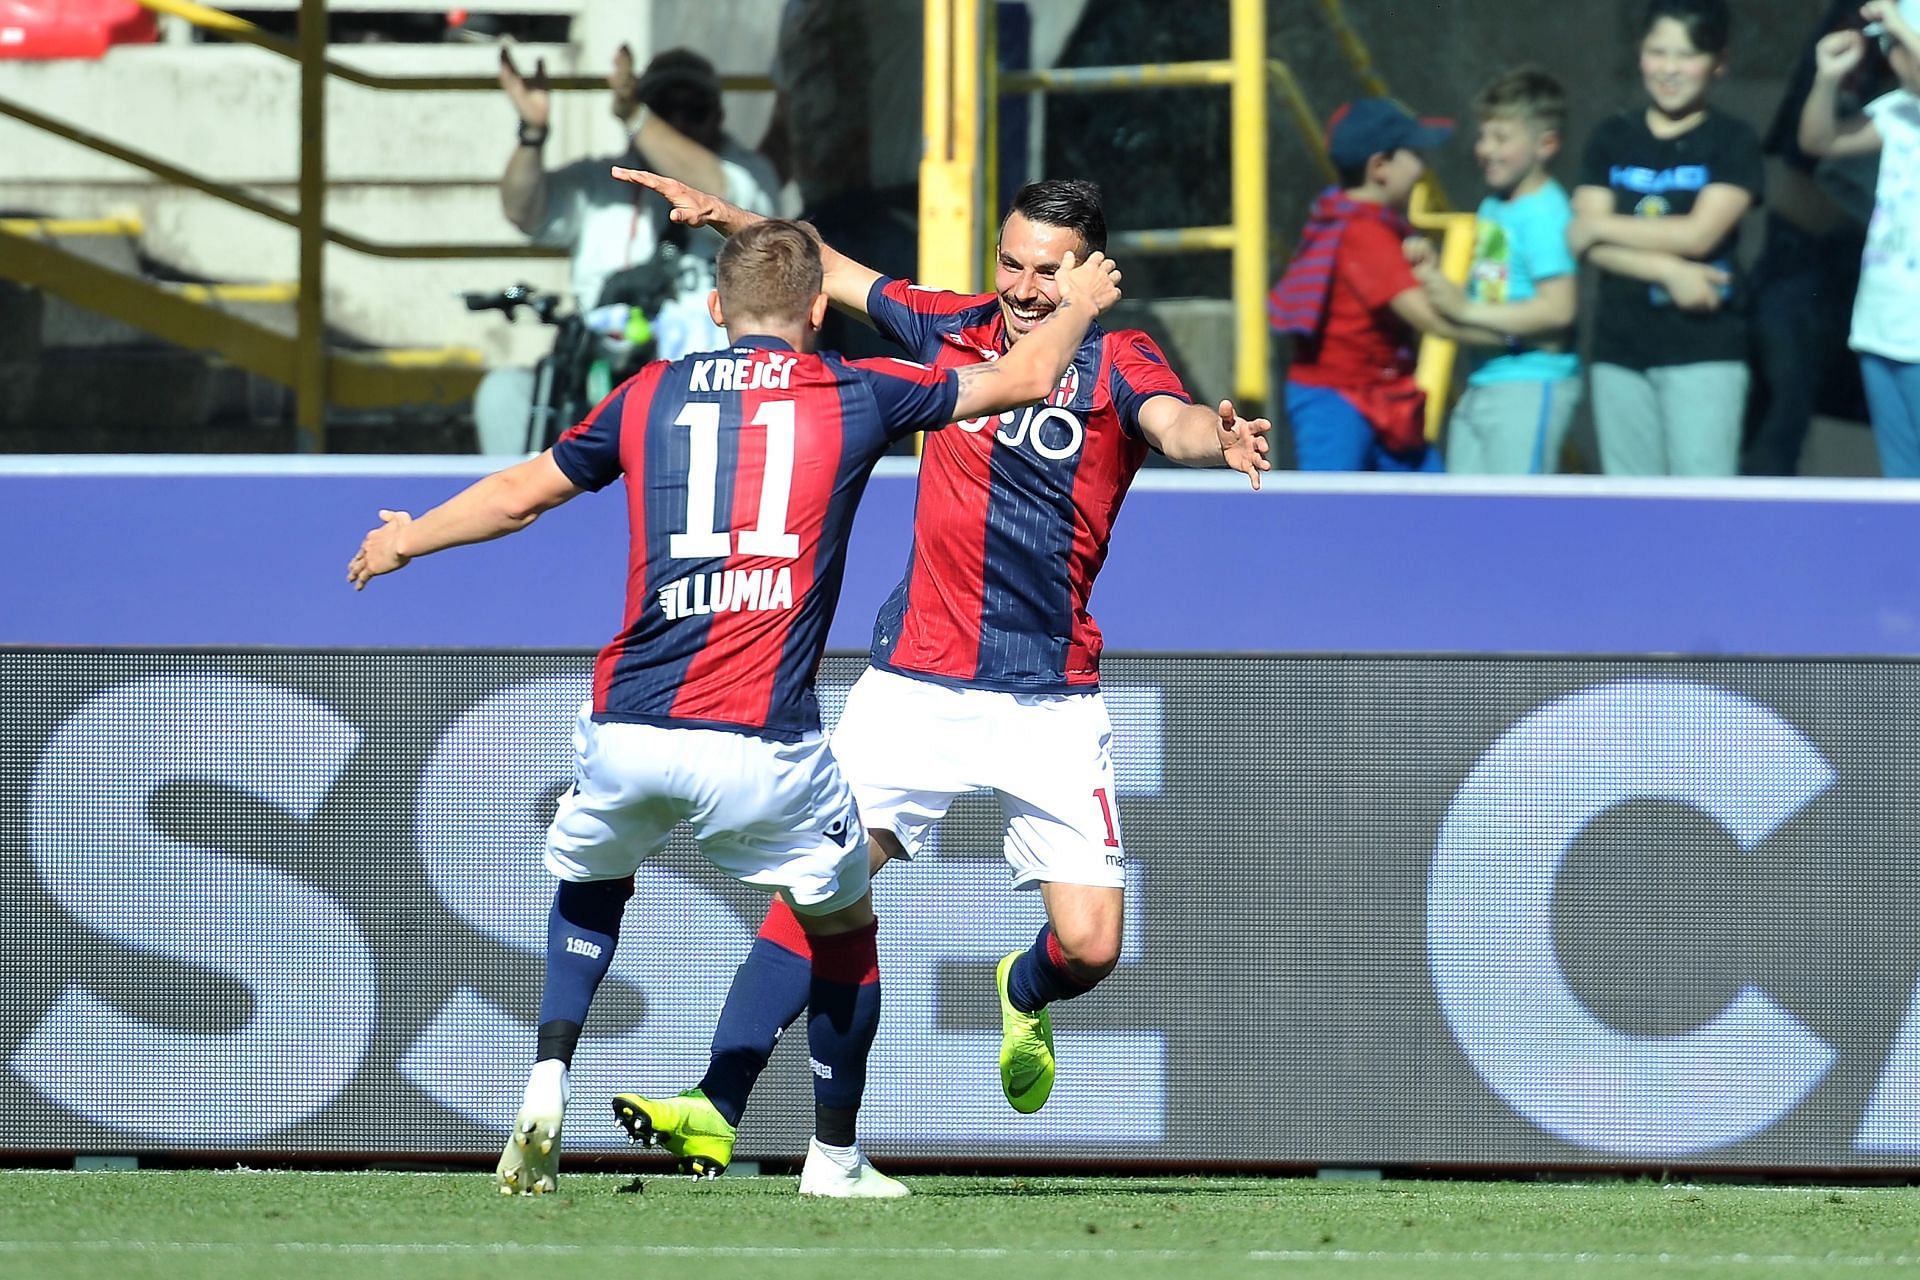 Bologna play host to Empoli on Sunday